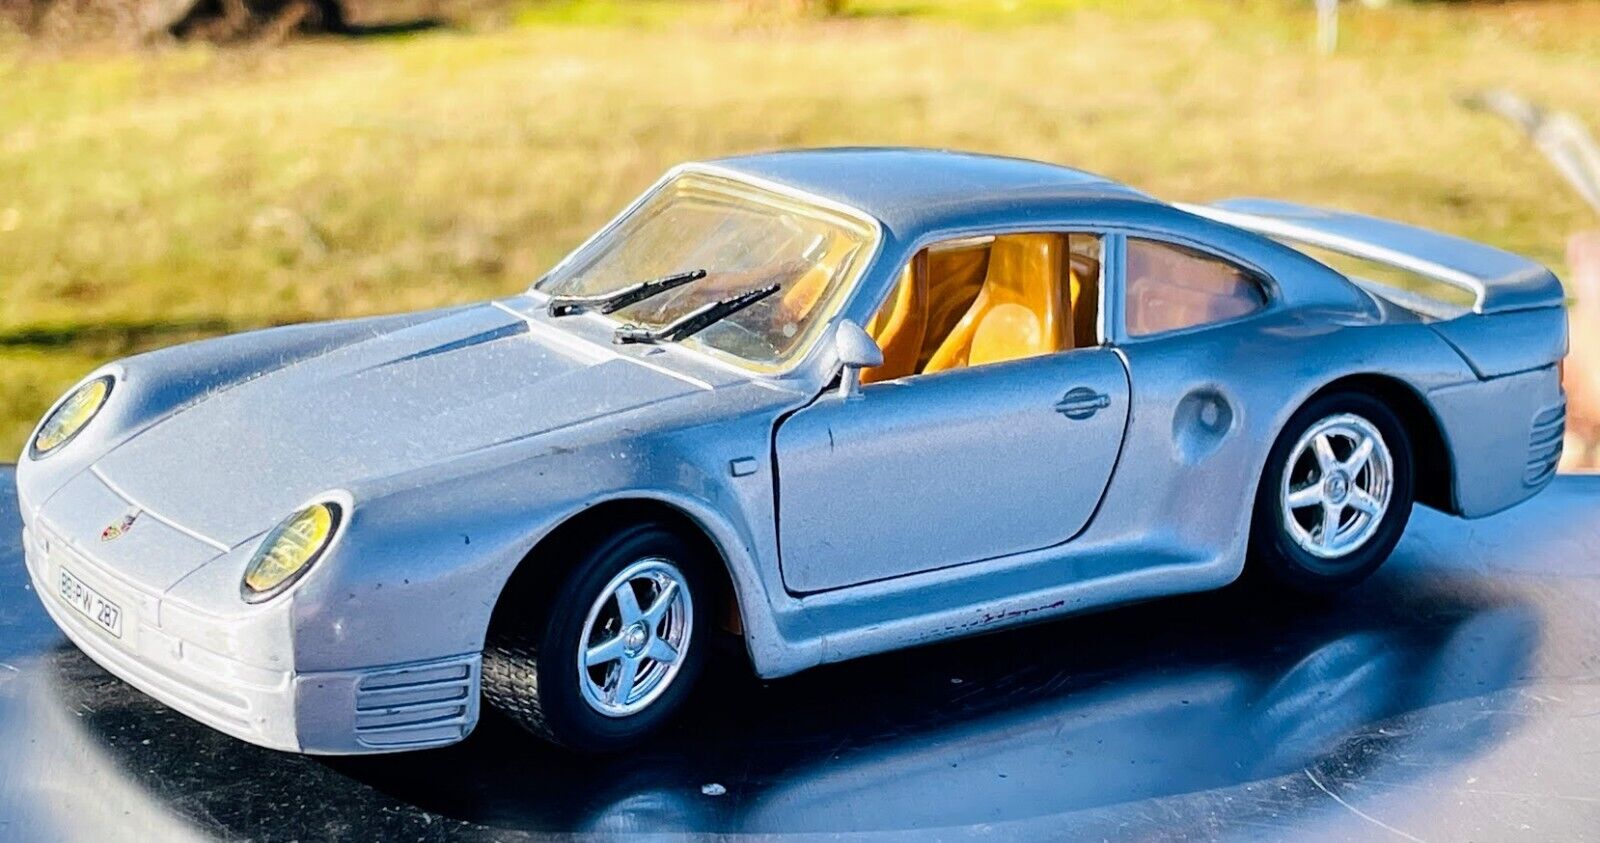 1988 Porsche 959 Silver Revell 1:24 Scale Diecast Metal Model Car